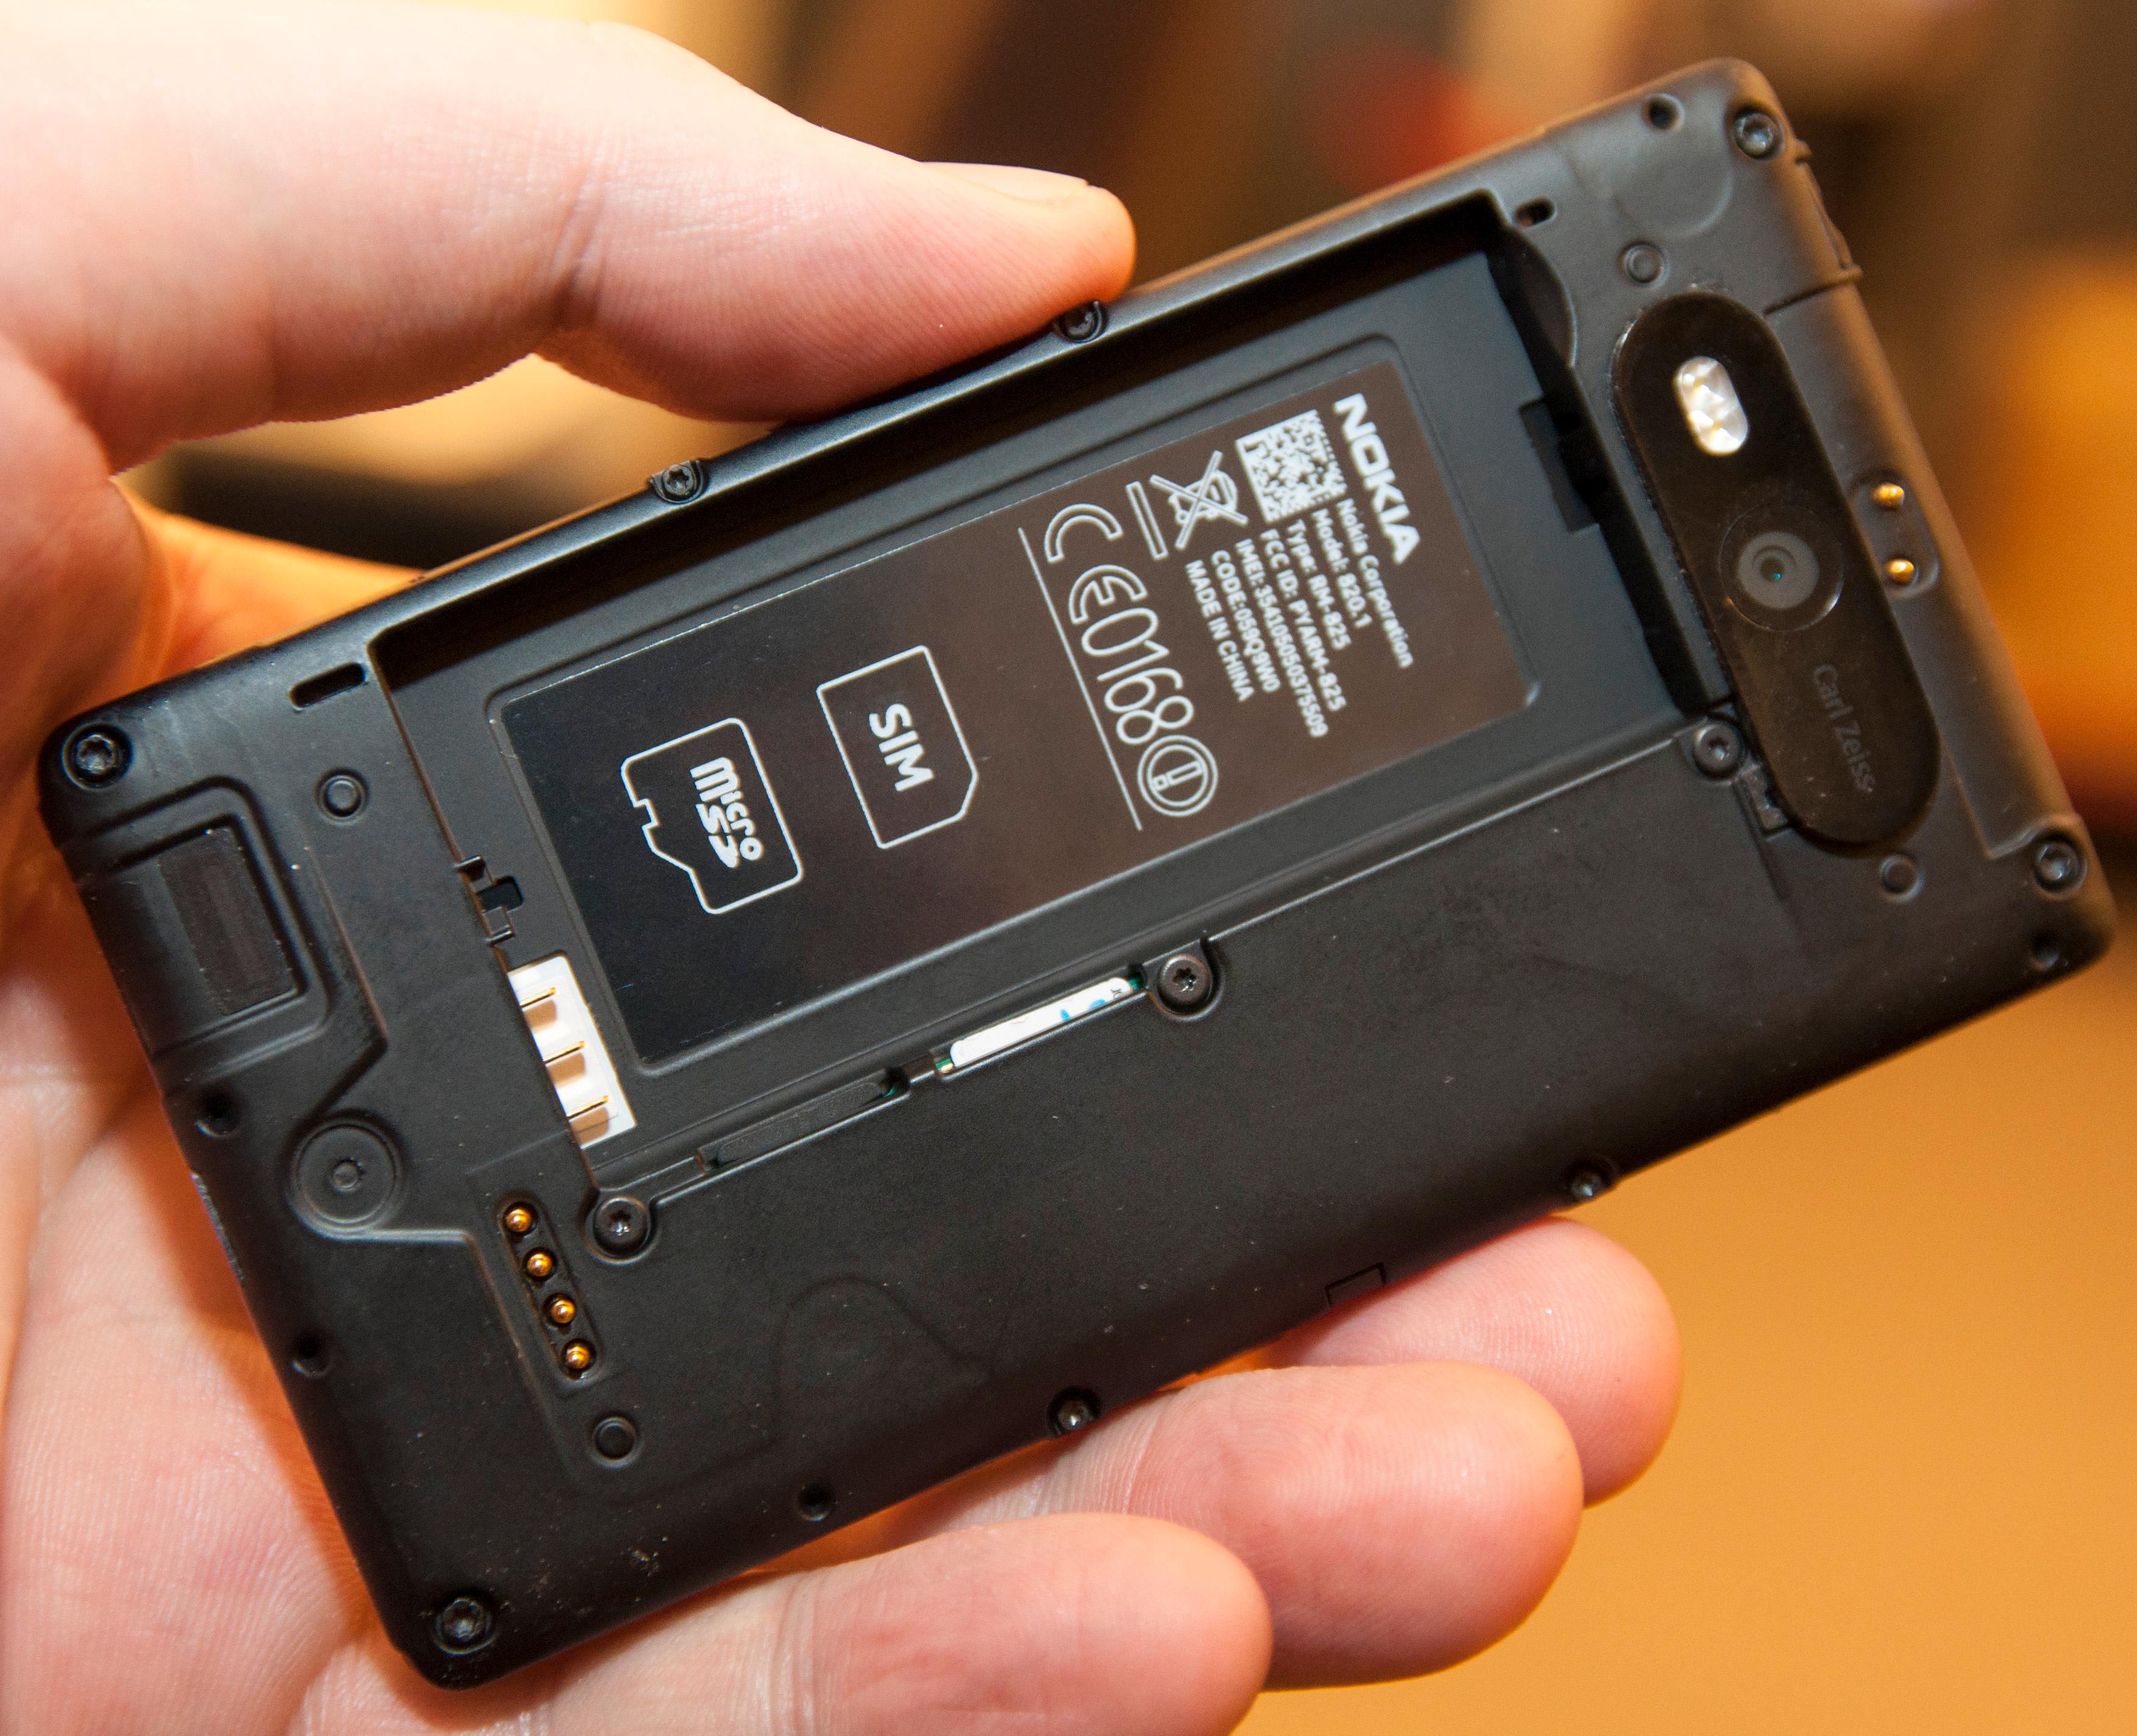 Nokia Lumia 820 har utskiftbart batteri og støtte for minnekort.Foto: Finn Jarle Kvalheim, Amobil.no